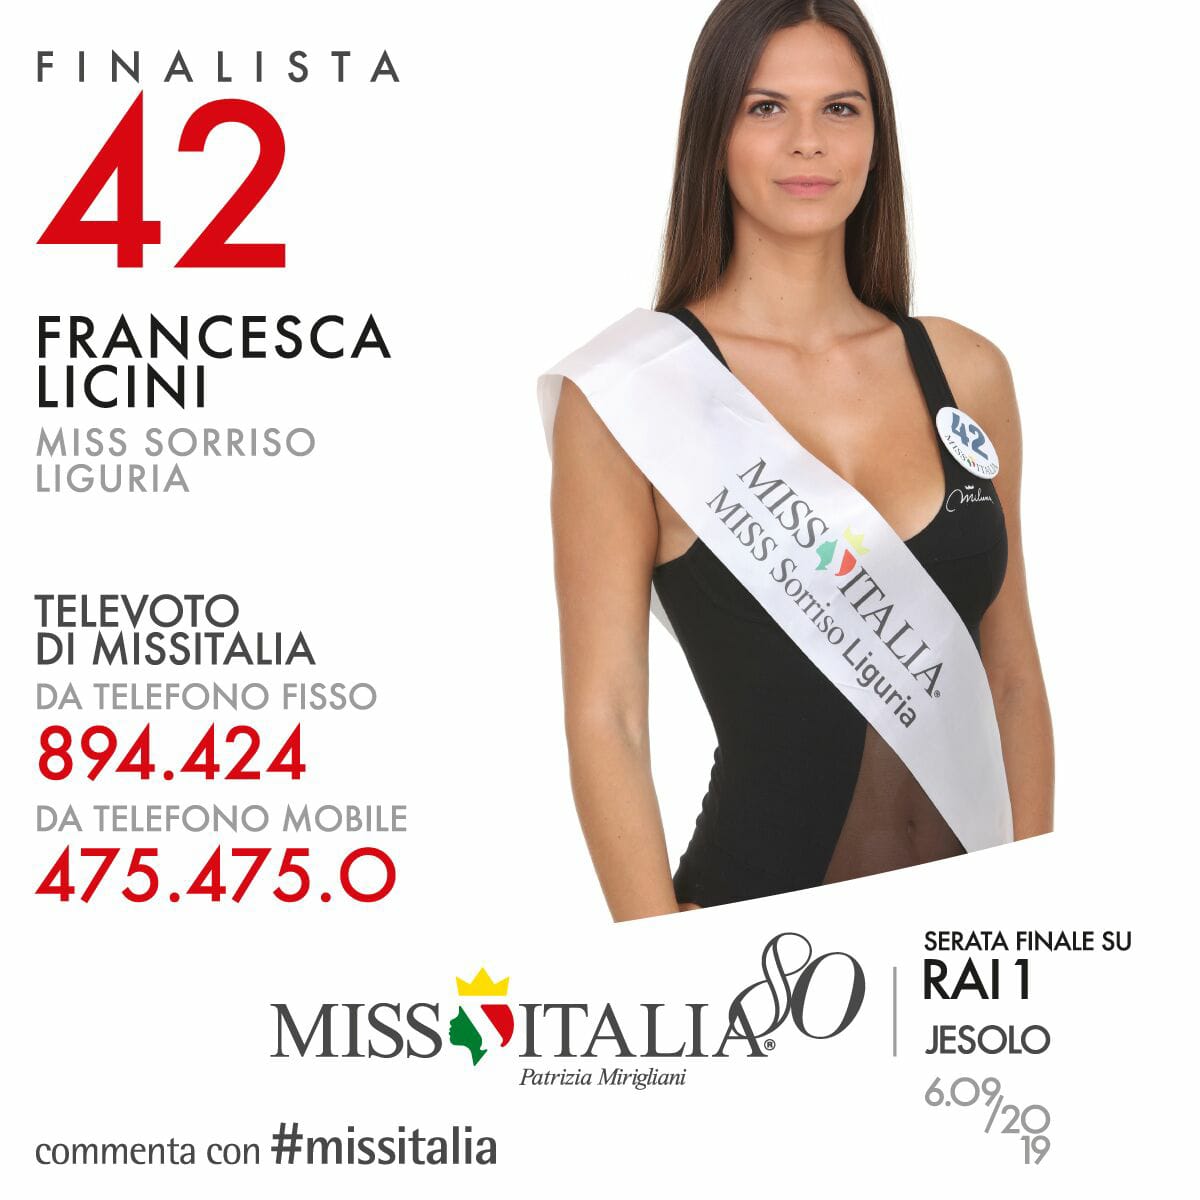 Francesca Licini Miss Sorriso Liguria N° 42 1